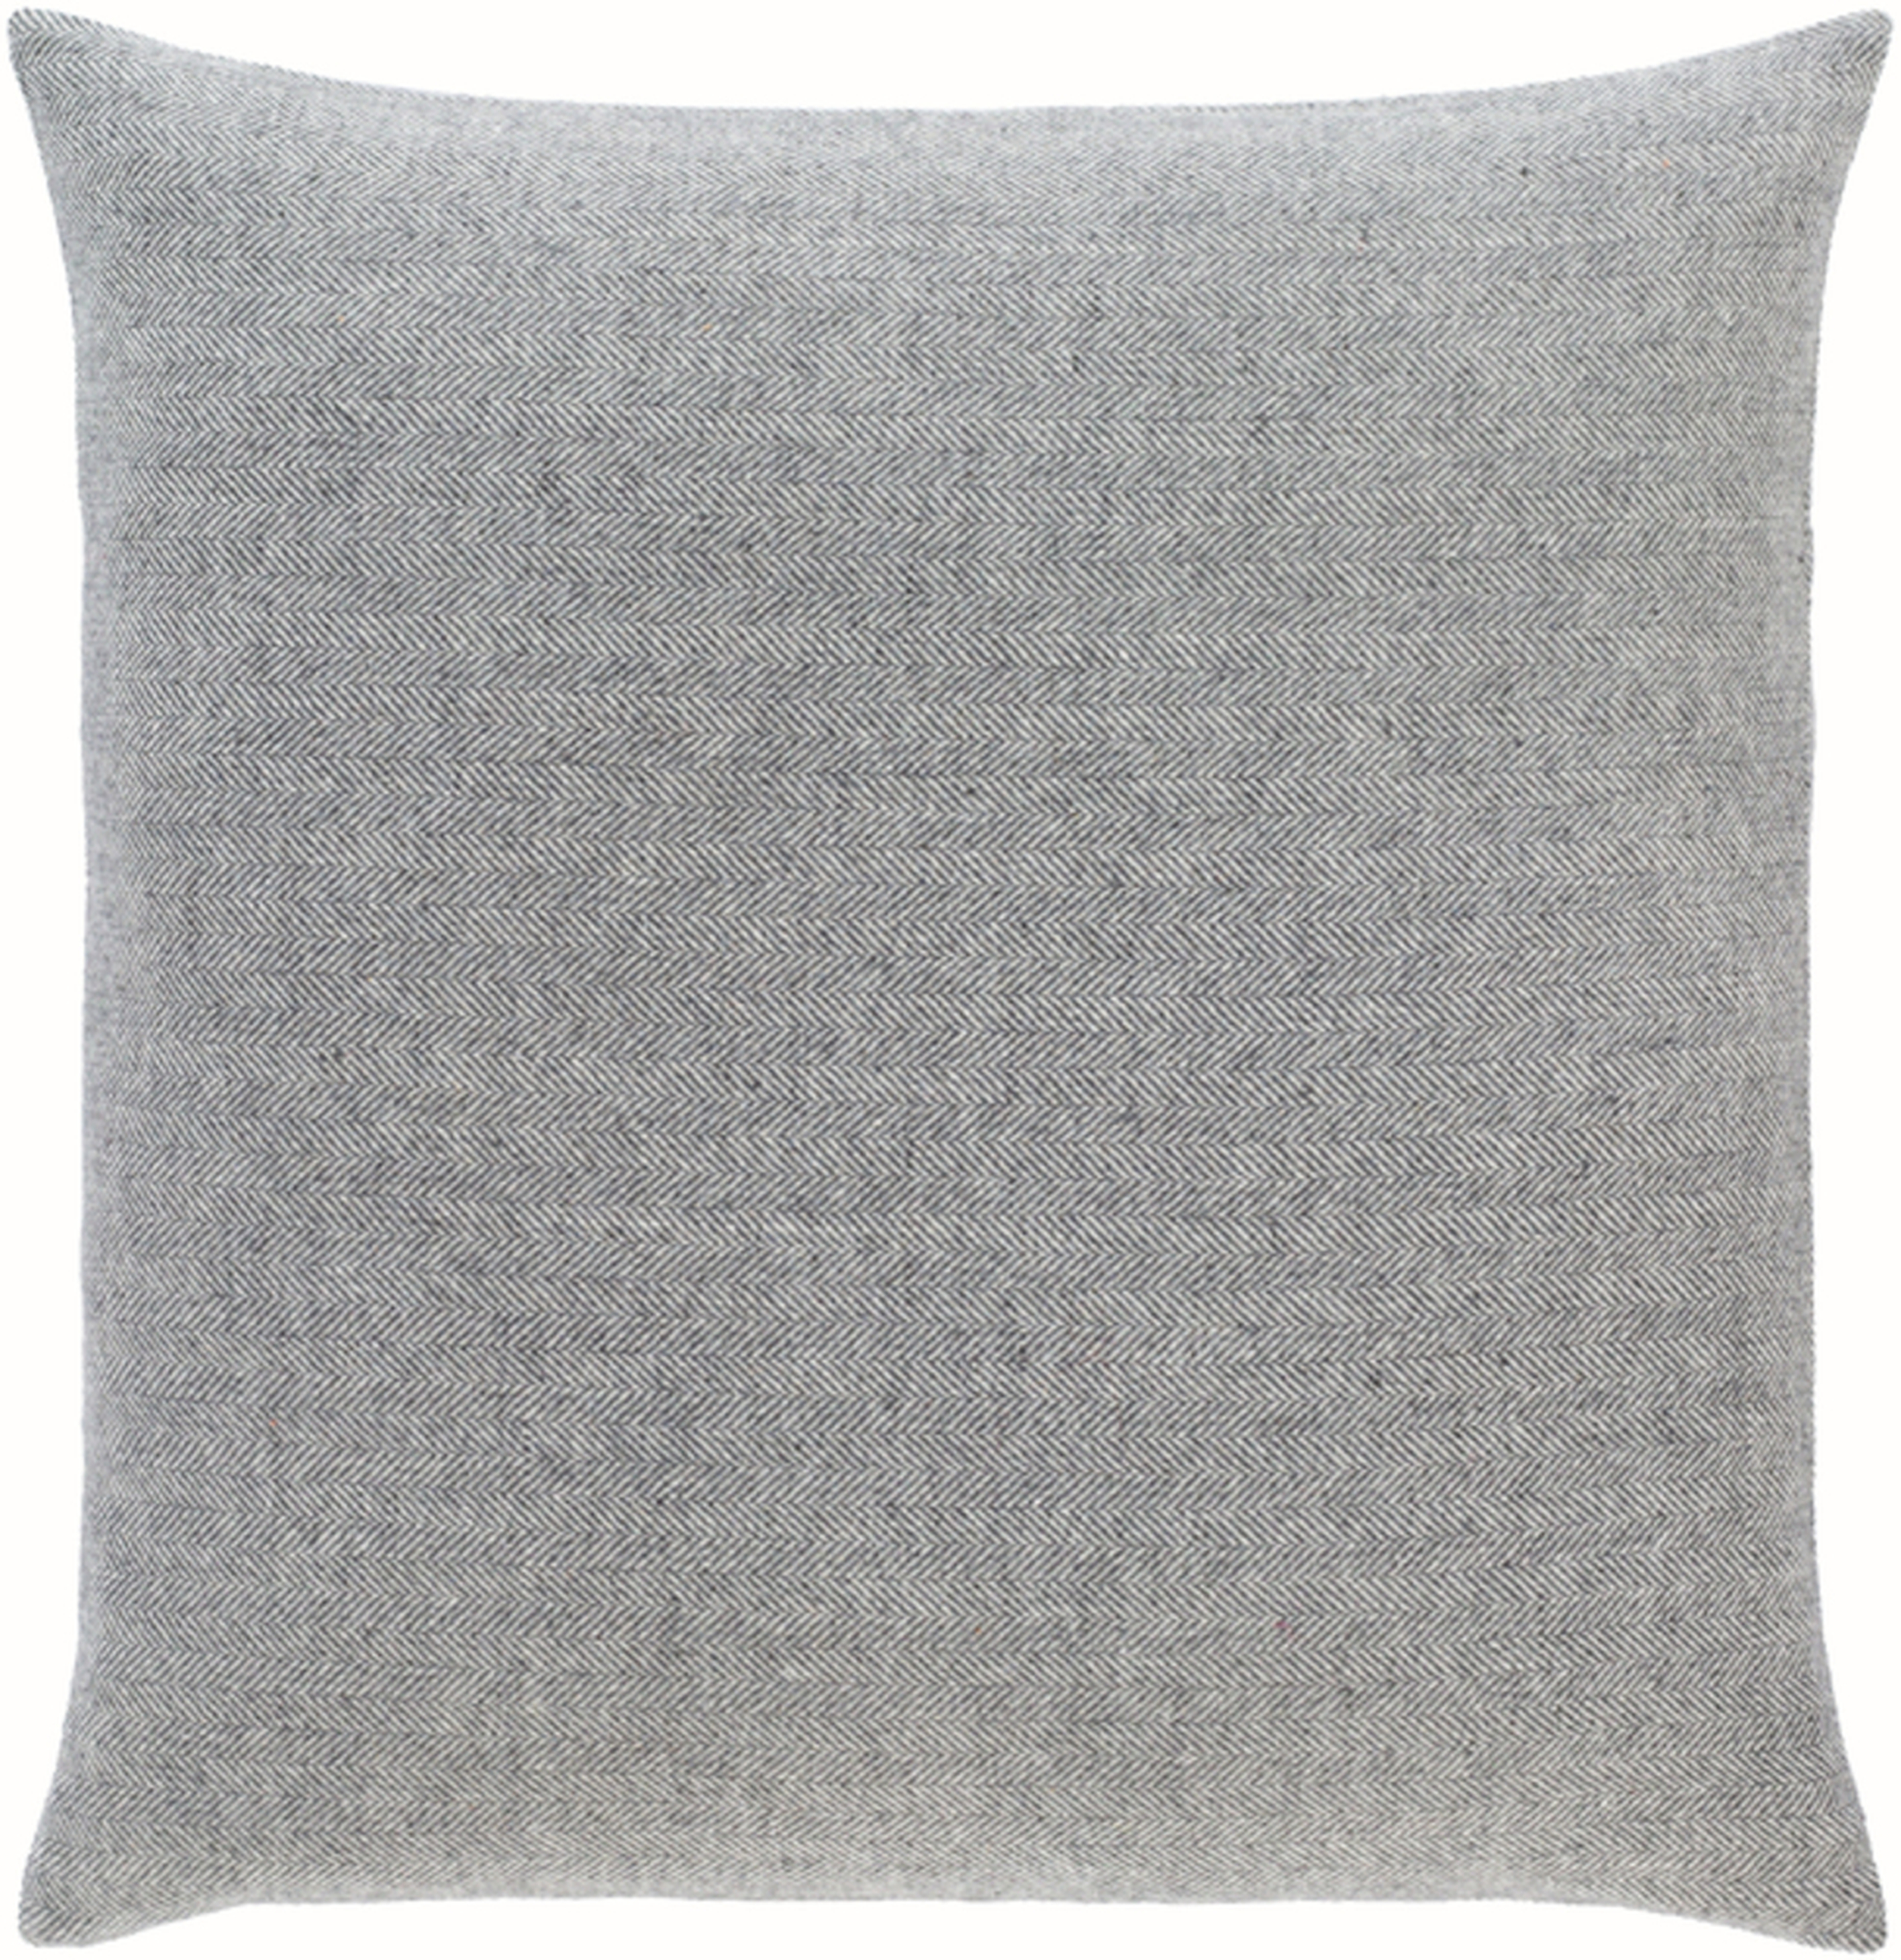 Wells Pillow, 18" x 18", Charcoal - Cove Goods